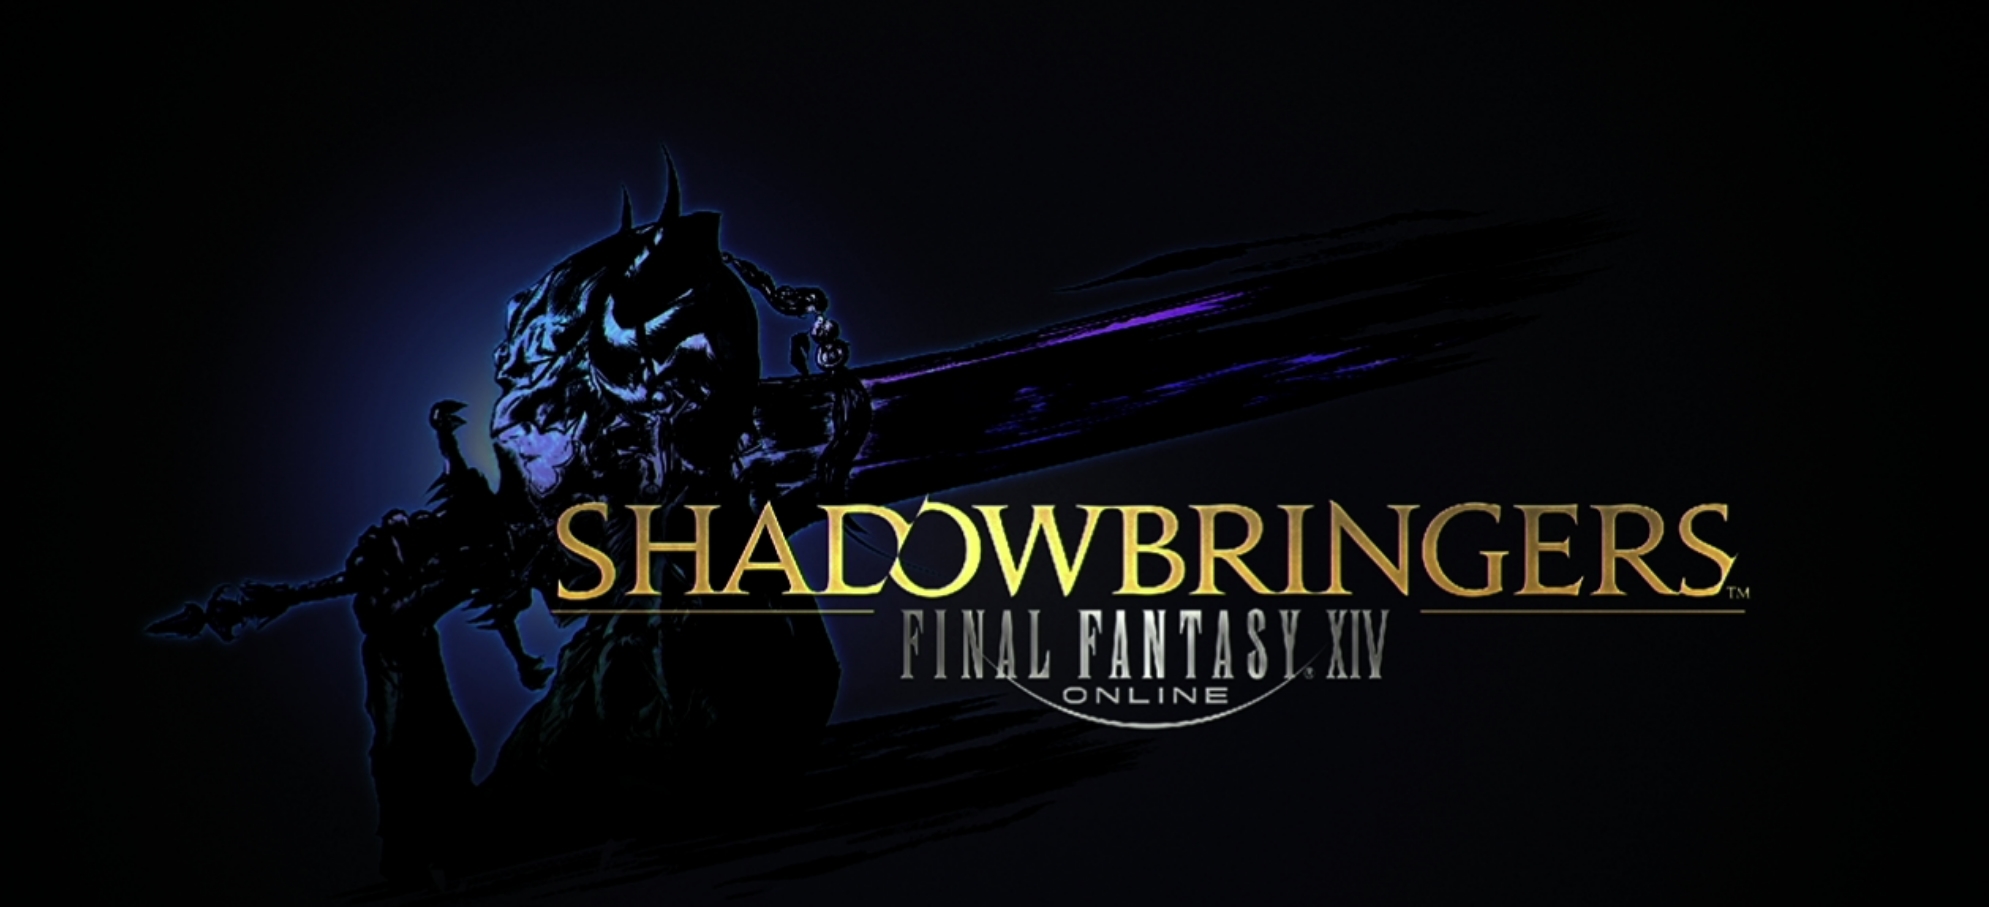 Final Fantasy XIV: AddOn Shadowbringers erfüllt Wünsche der Fans